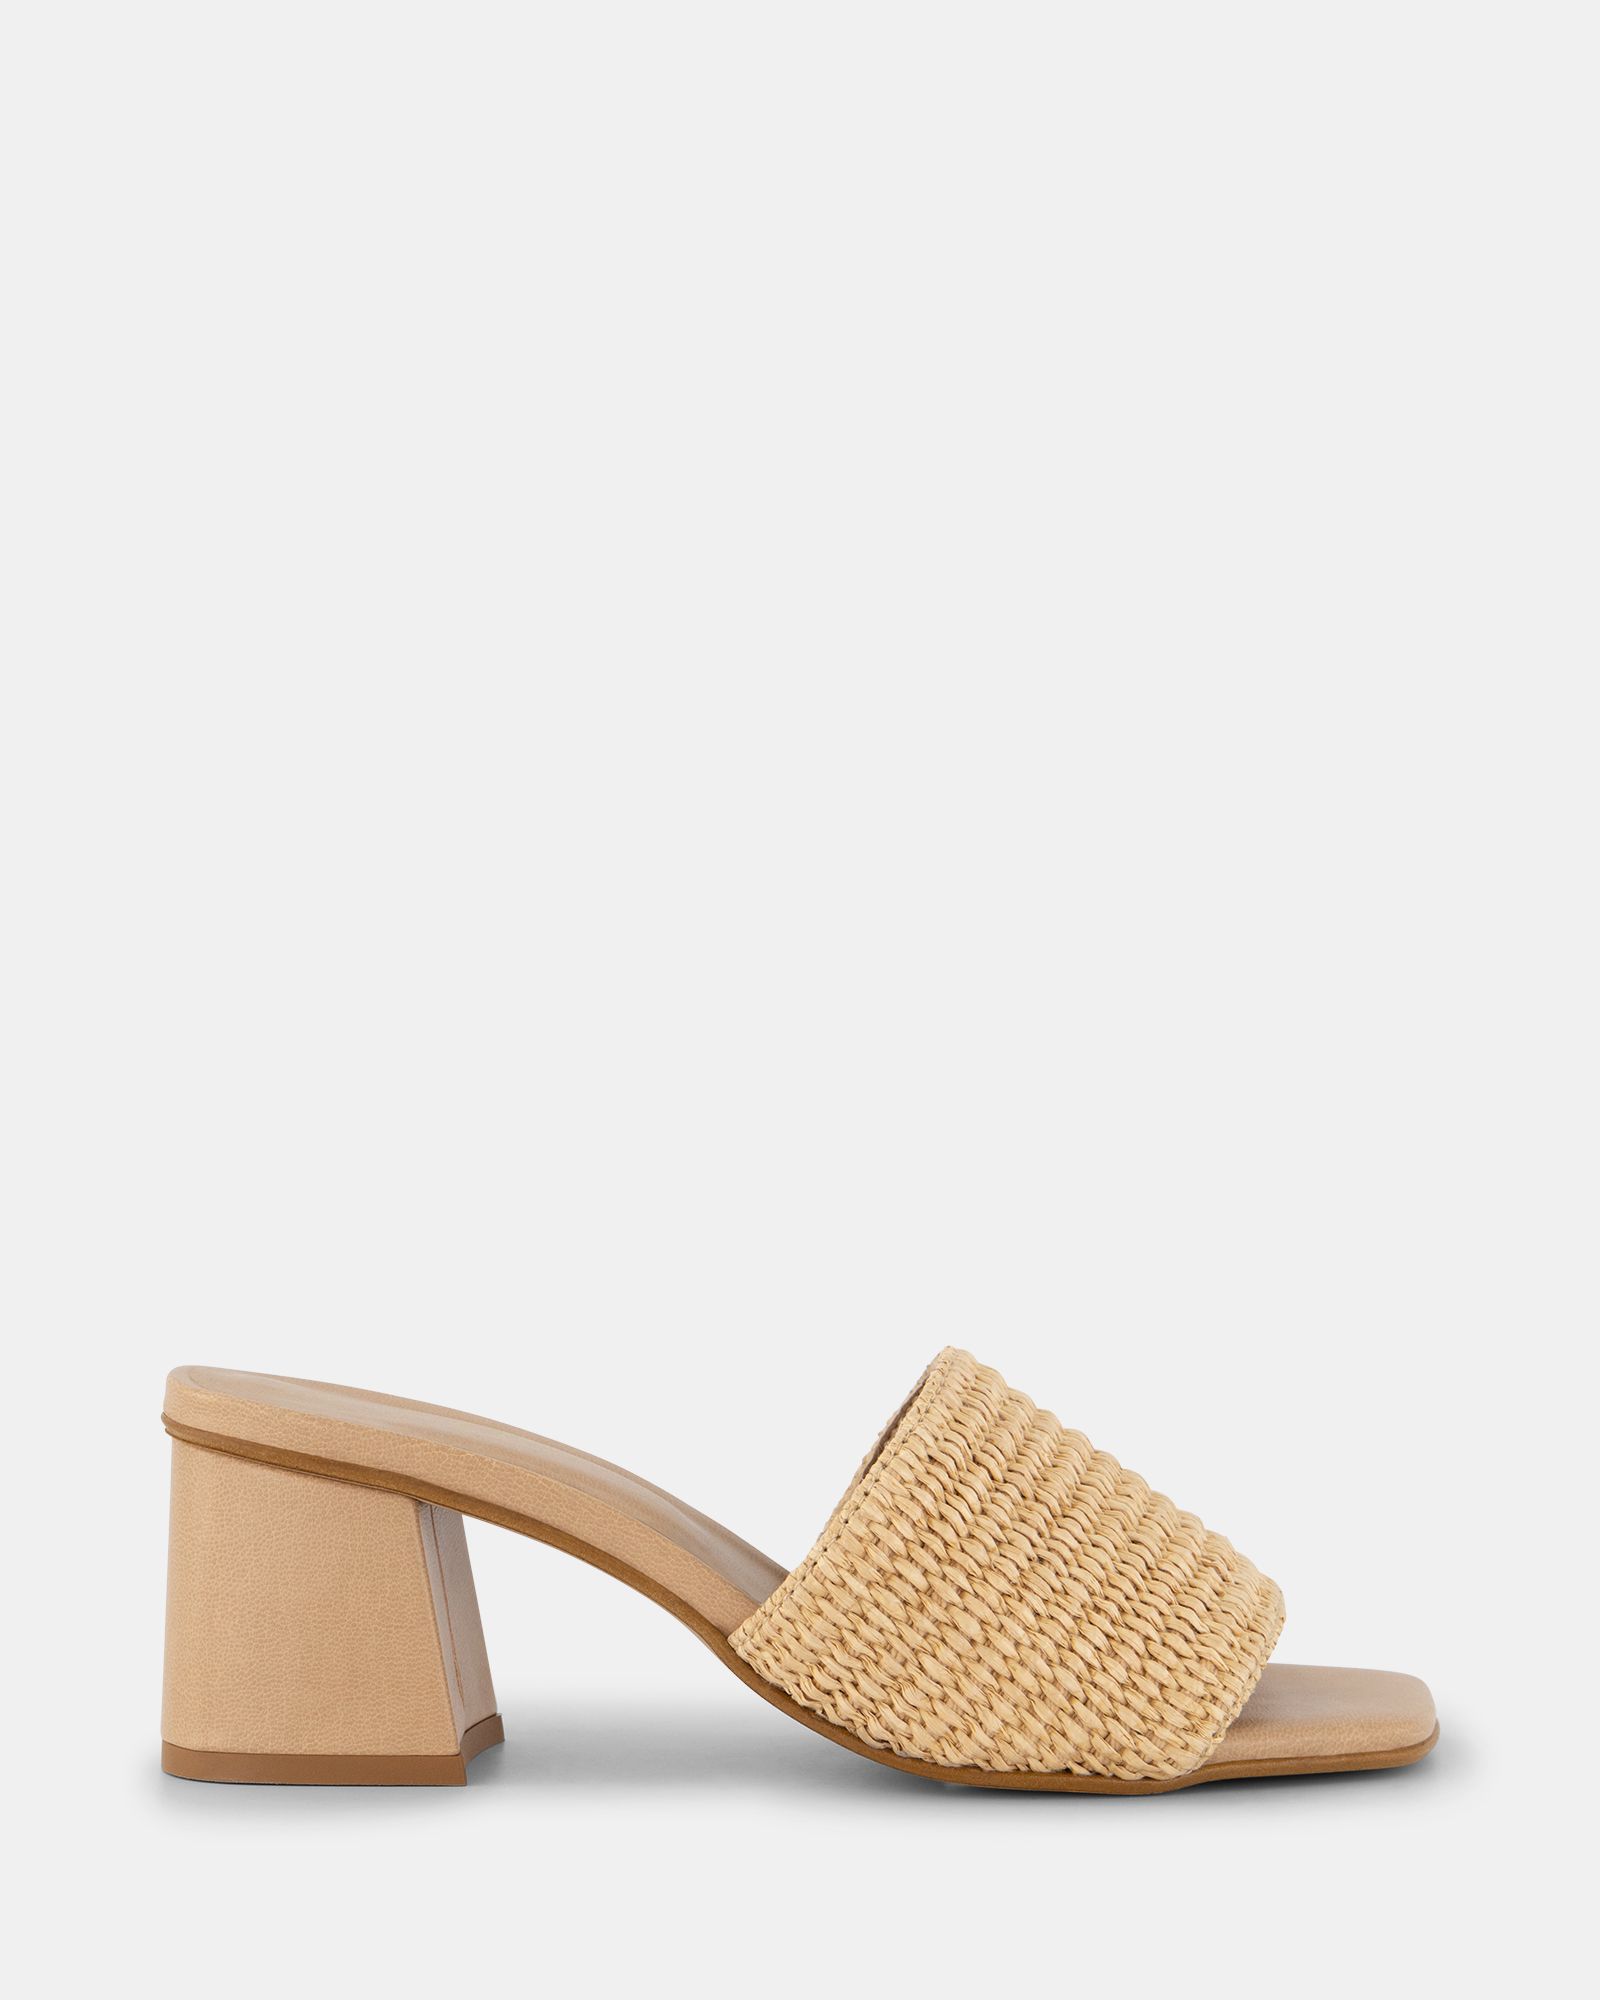 Buy DANA Natural Raffia heels Online at Shoe Connection